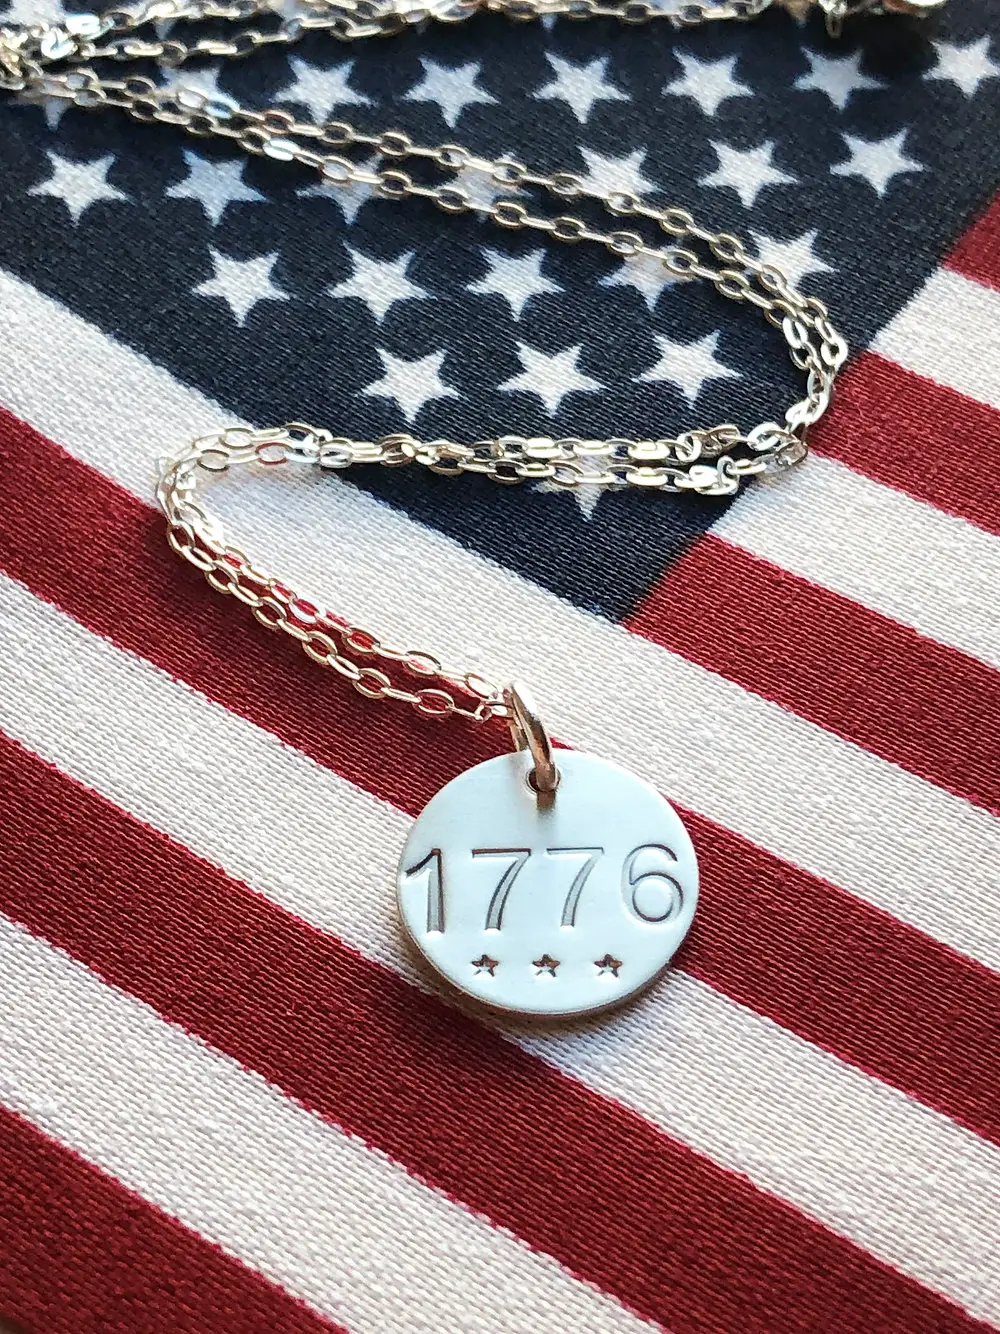 1776 silver necklace